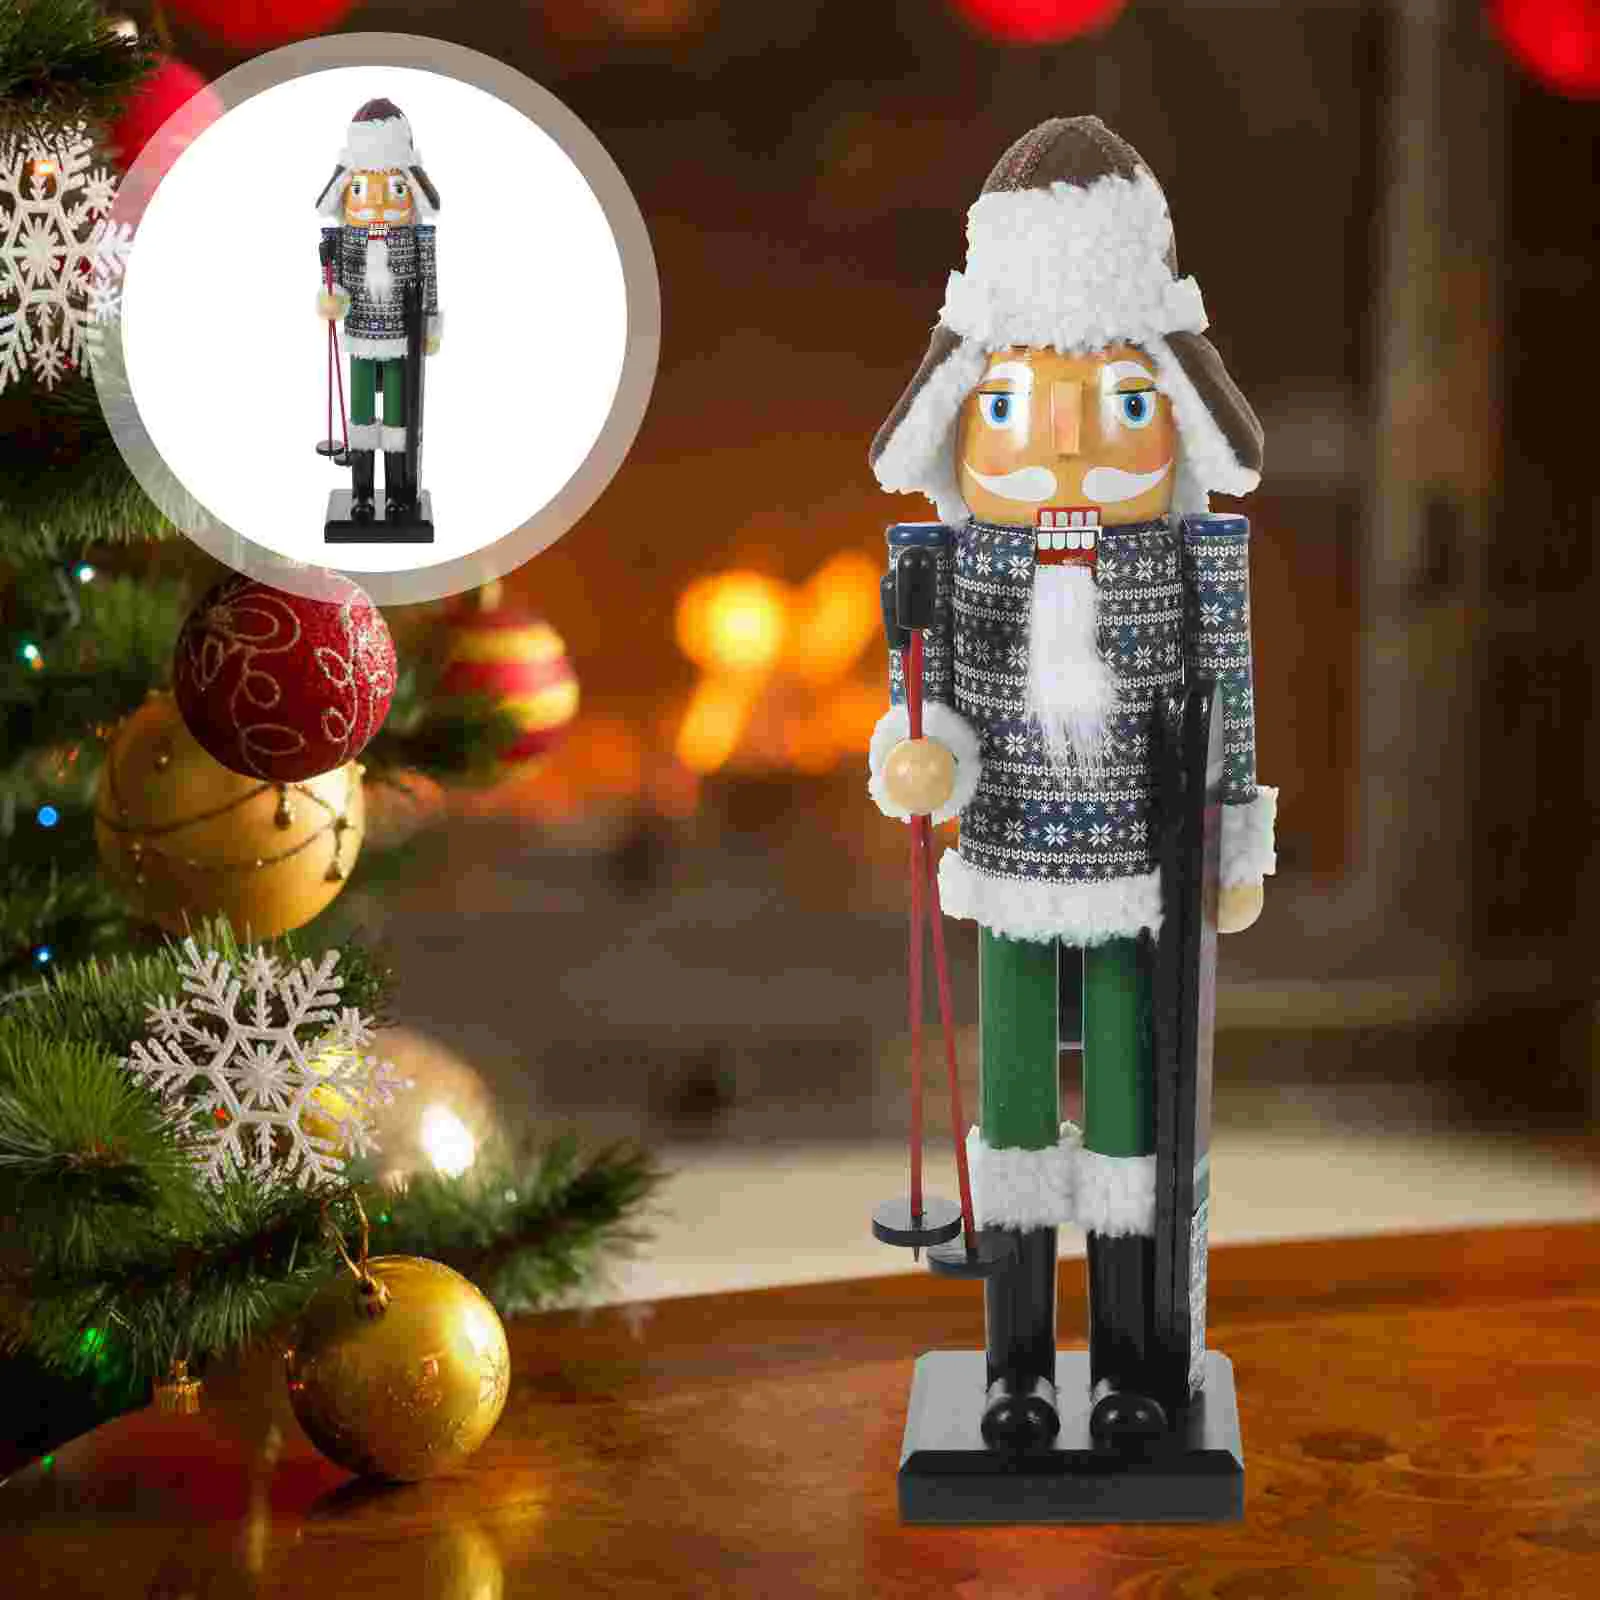 

36cm Christmas Nutcracker Figure Desktop Nutcracker Skier Soldier Statue Holiday Decor Table Ornaments Figurine Party Decoration